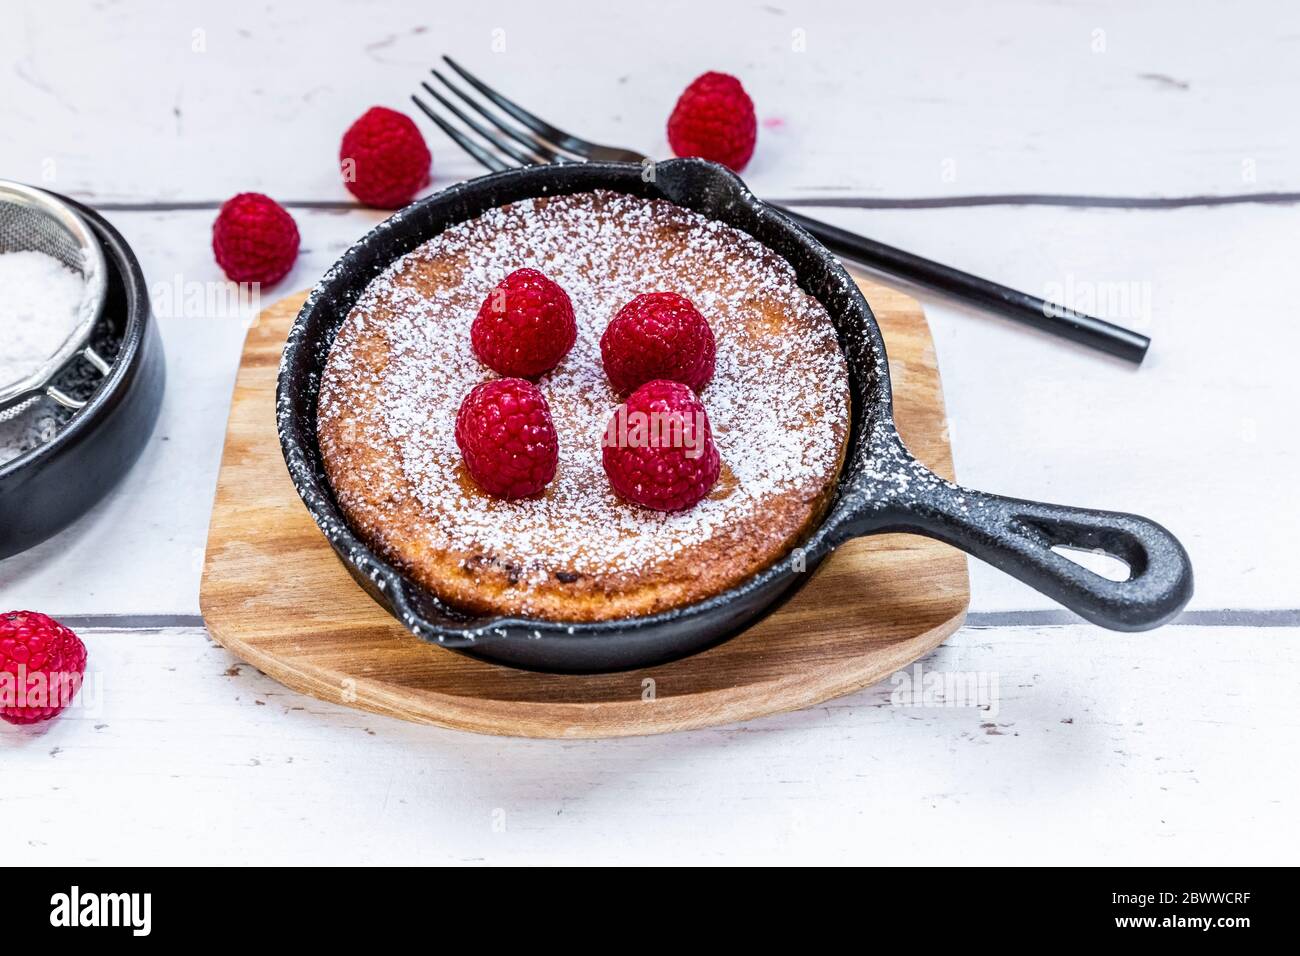 Dutch baby pancake with raspberries and powdered sugar Stock Photo